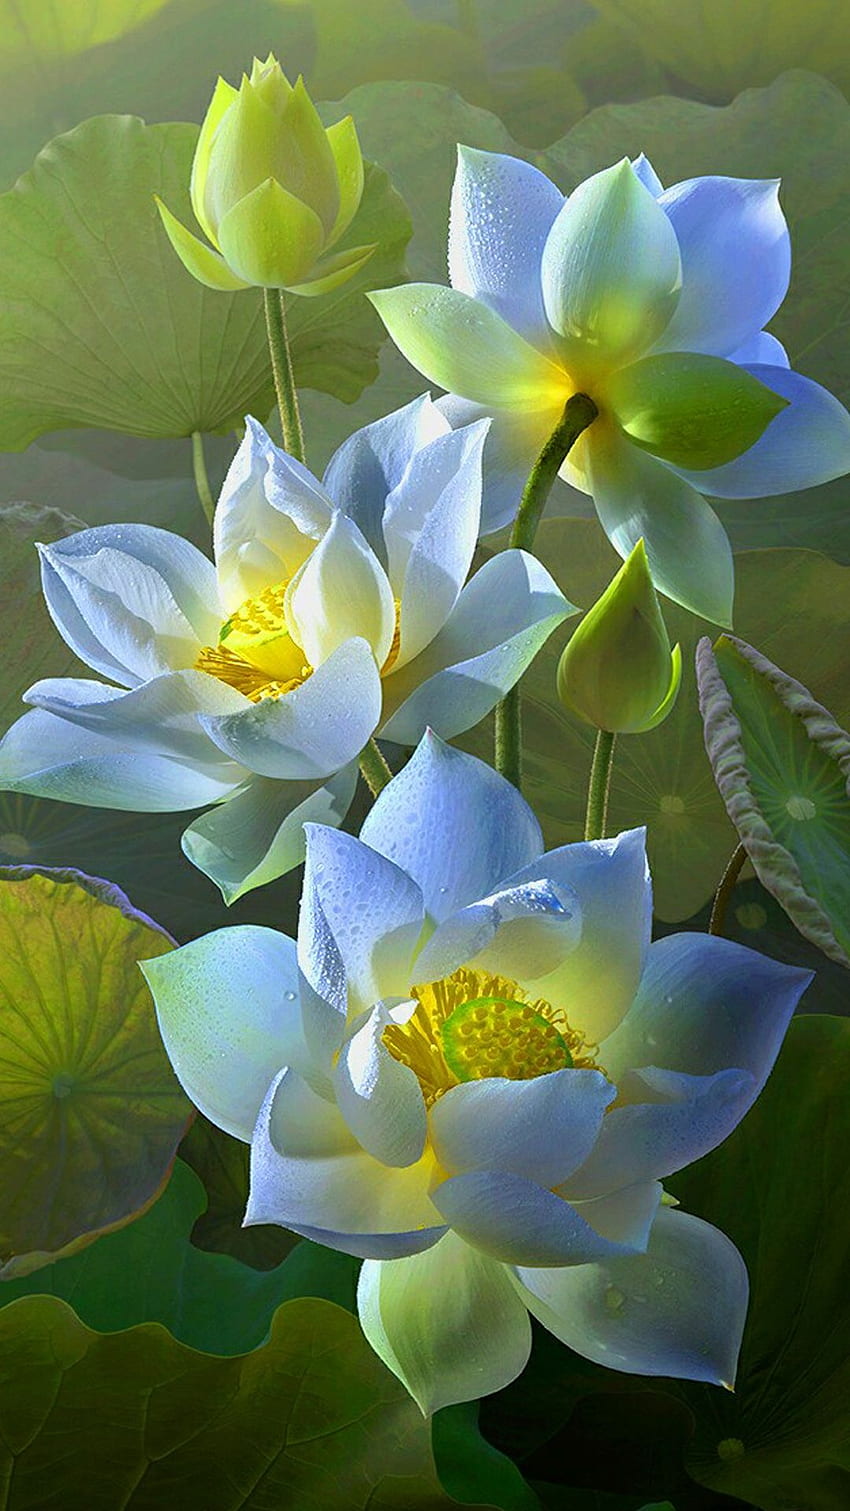 Bunga Teratai Cantik (Halaman 1), Bunga Teratai Biru Kecil wallpaper ponsel HD